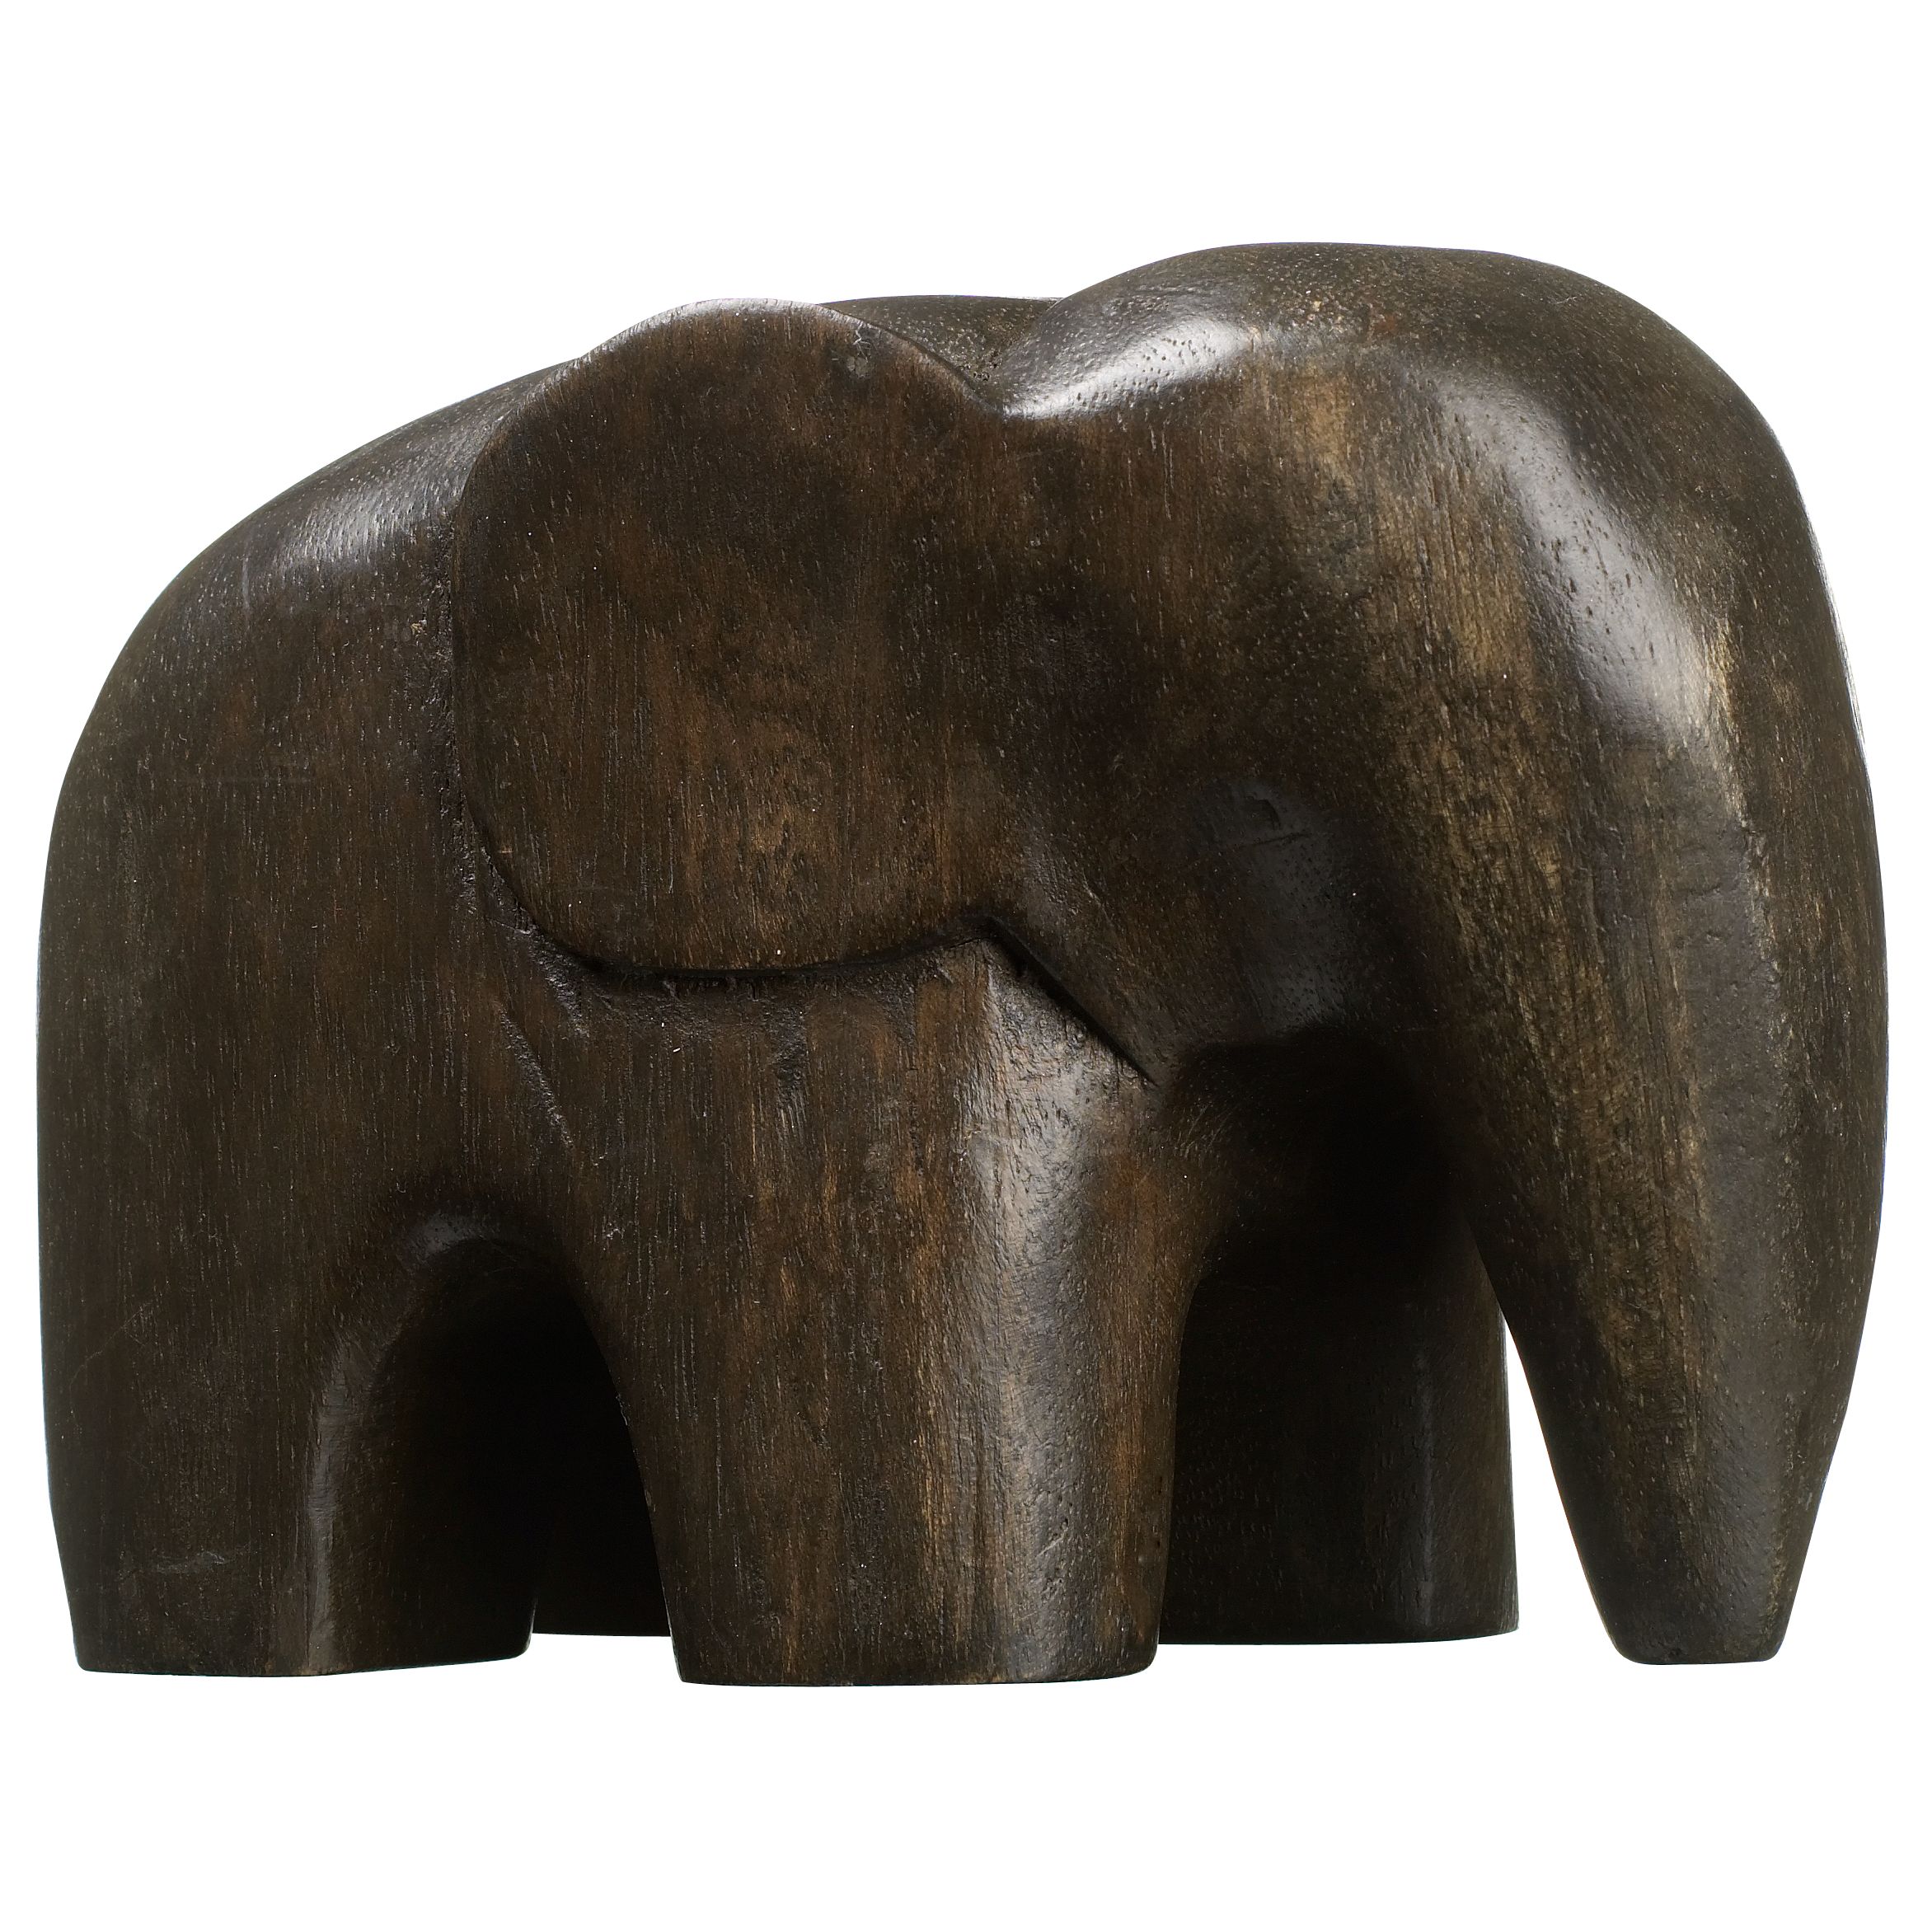 John Lewis Wooden Elephant Sculpture, Small